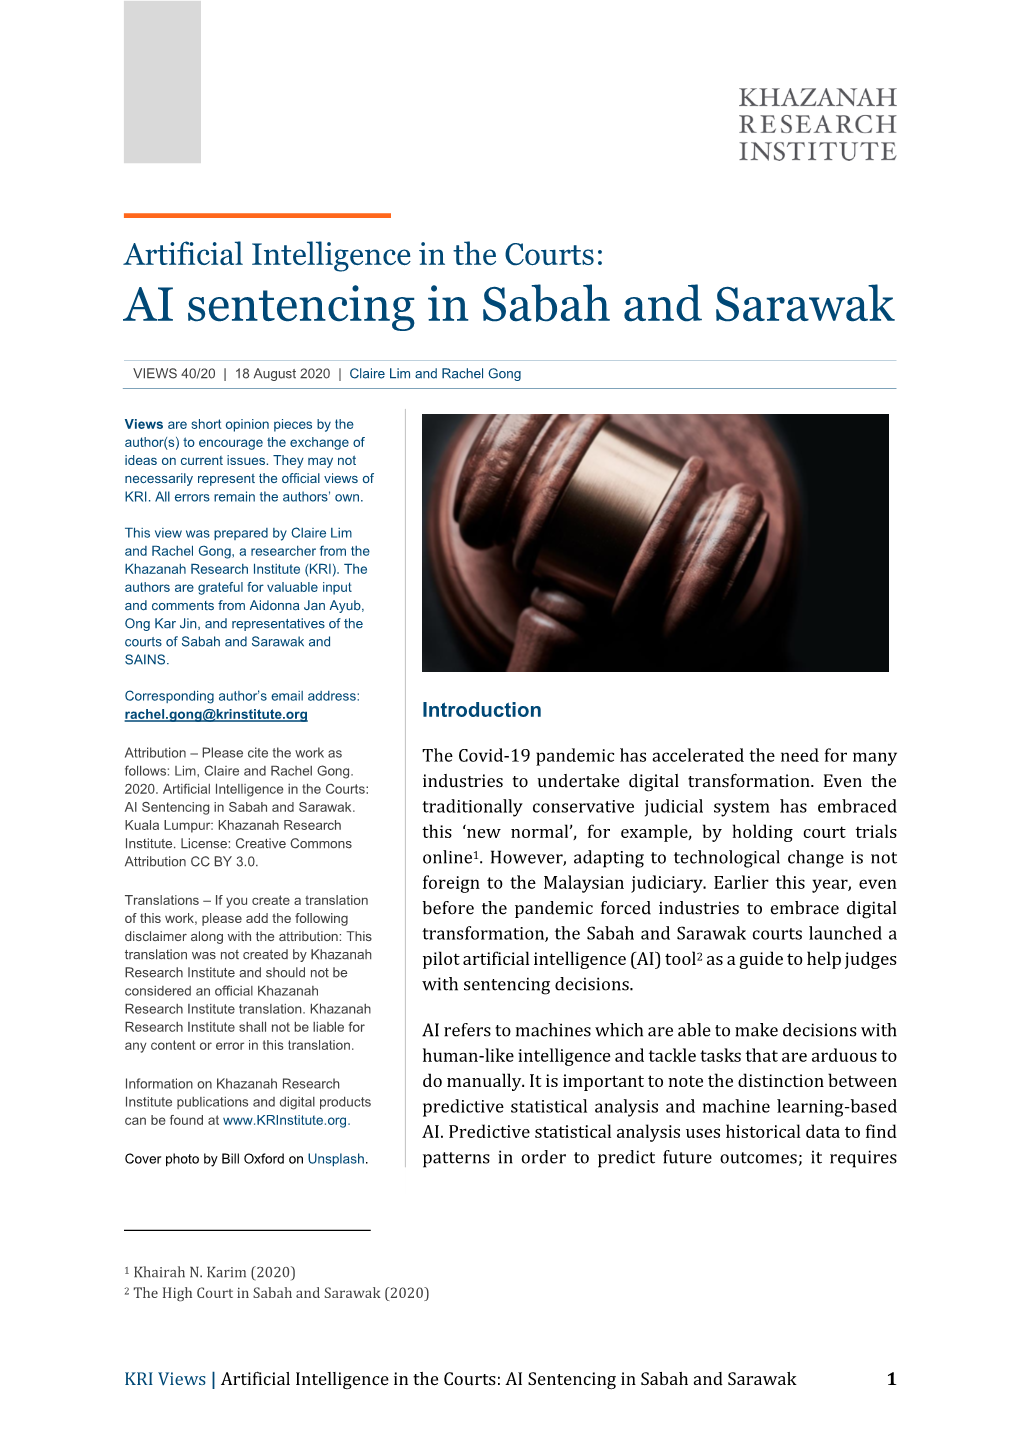 AI Sentencing in Sabah and Sarawak